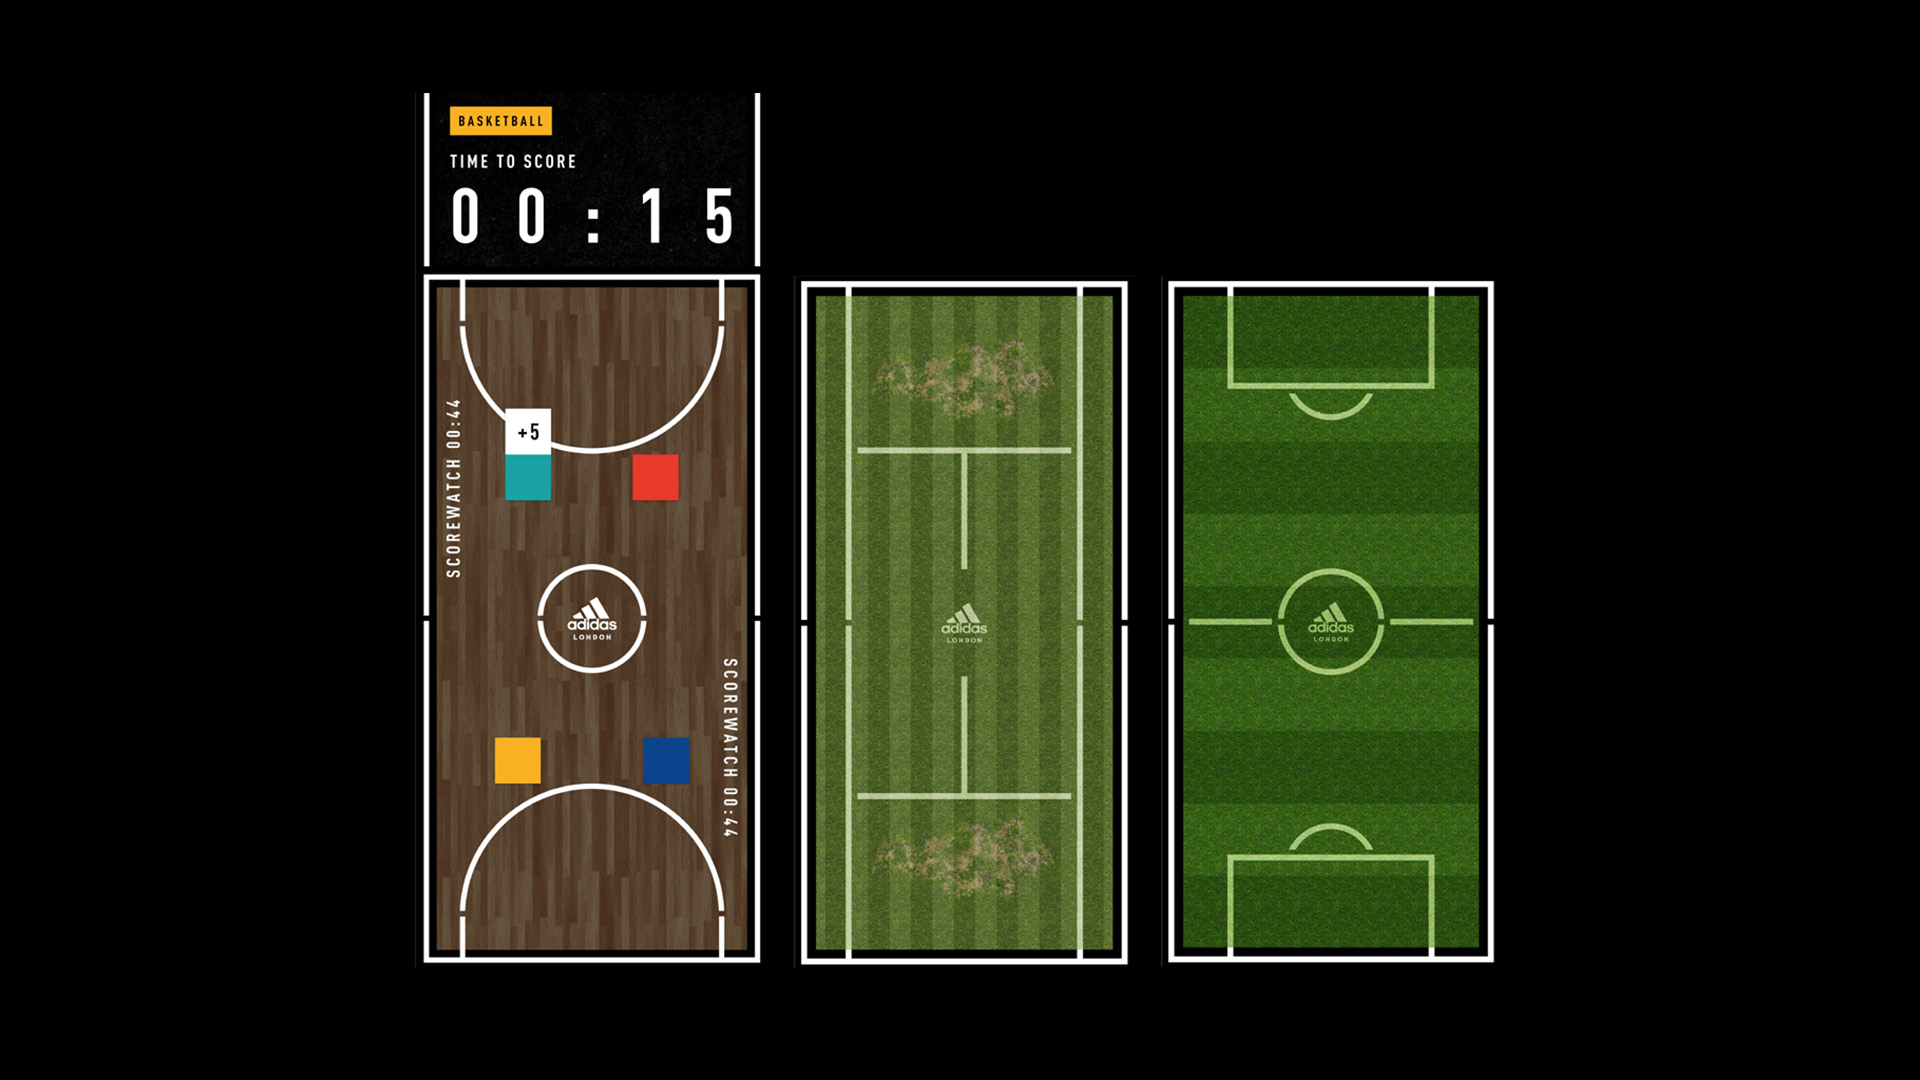 Adidas final court design with screen UI